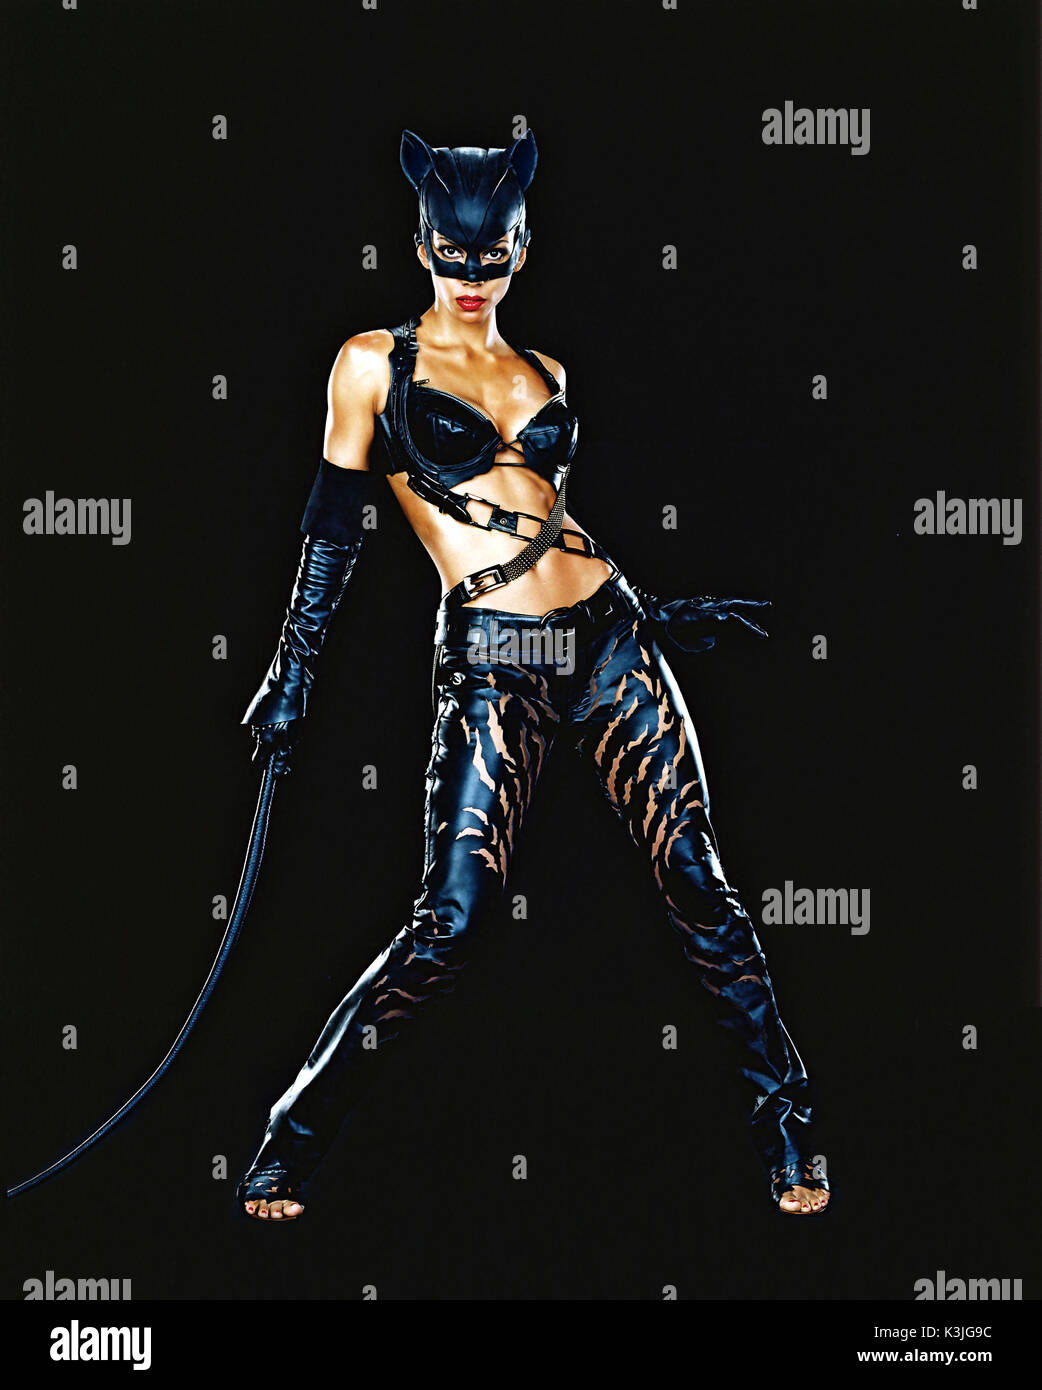 Halle Berry Batgirl